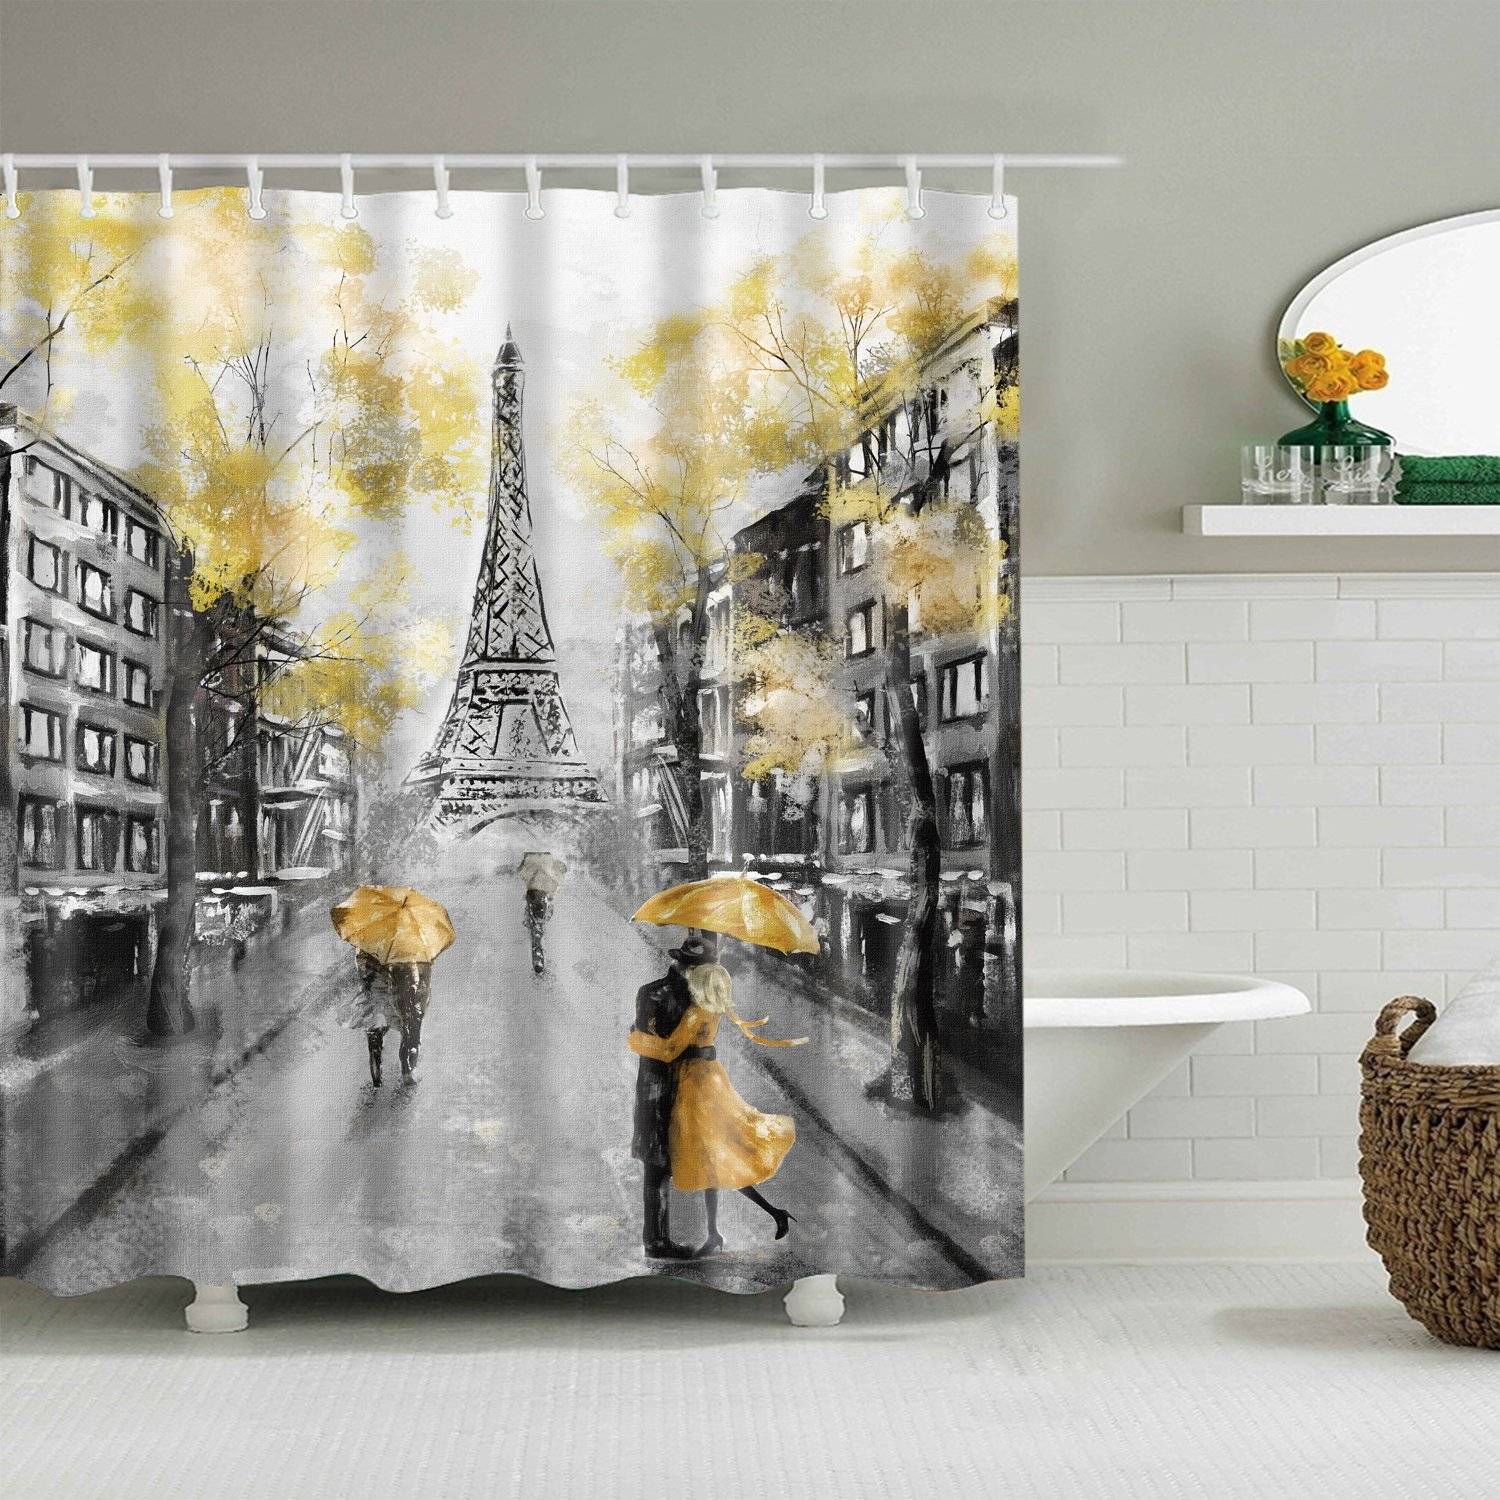 Romantic City Umbrella with Eiffel Tower Paris Shower Curtain